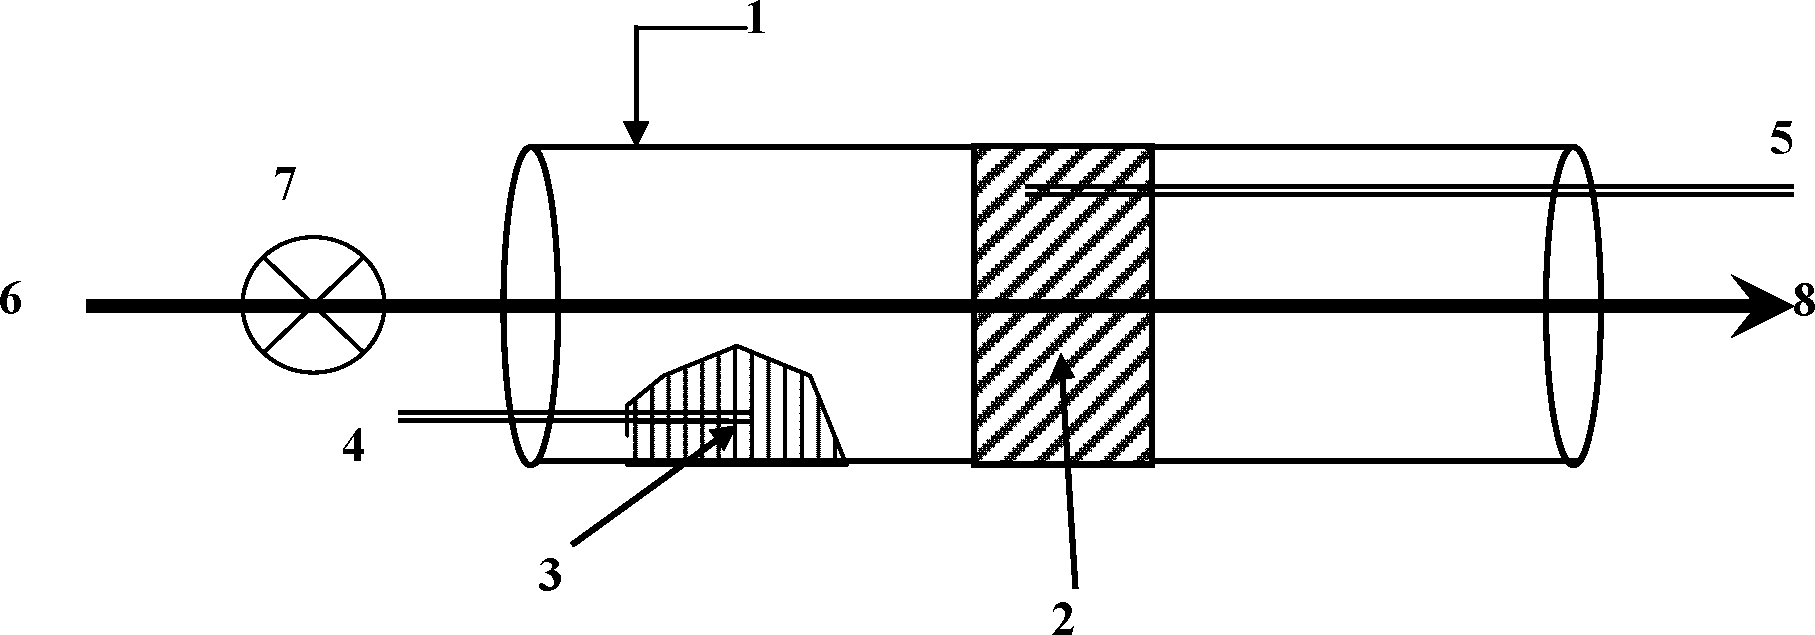 Vapor-phase deposition preparation method of load type iron catalyst